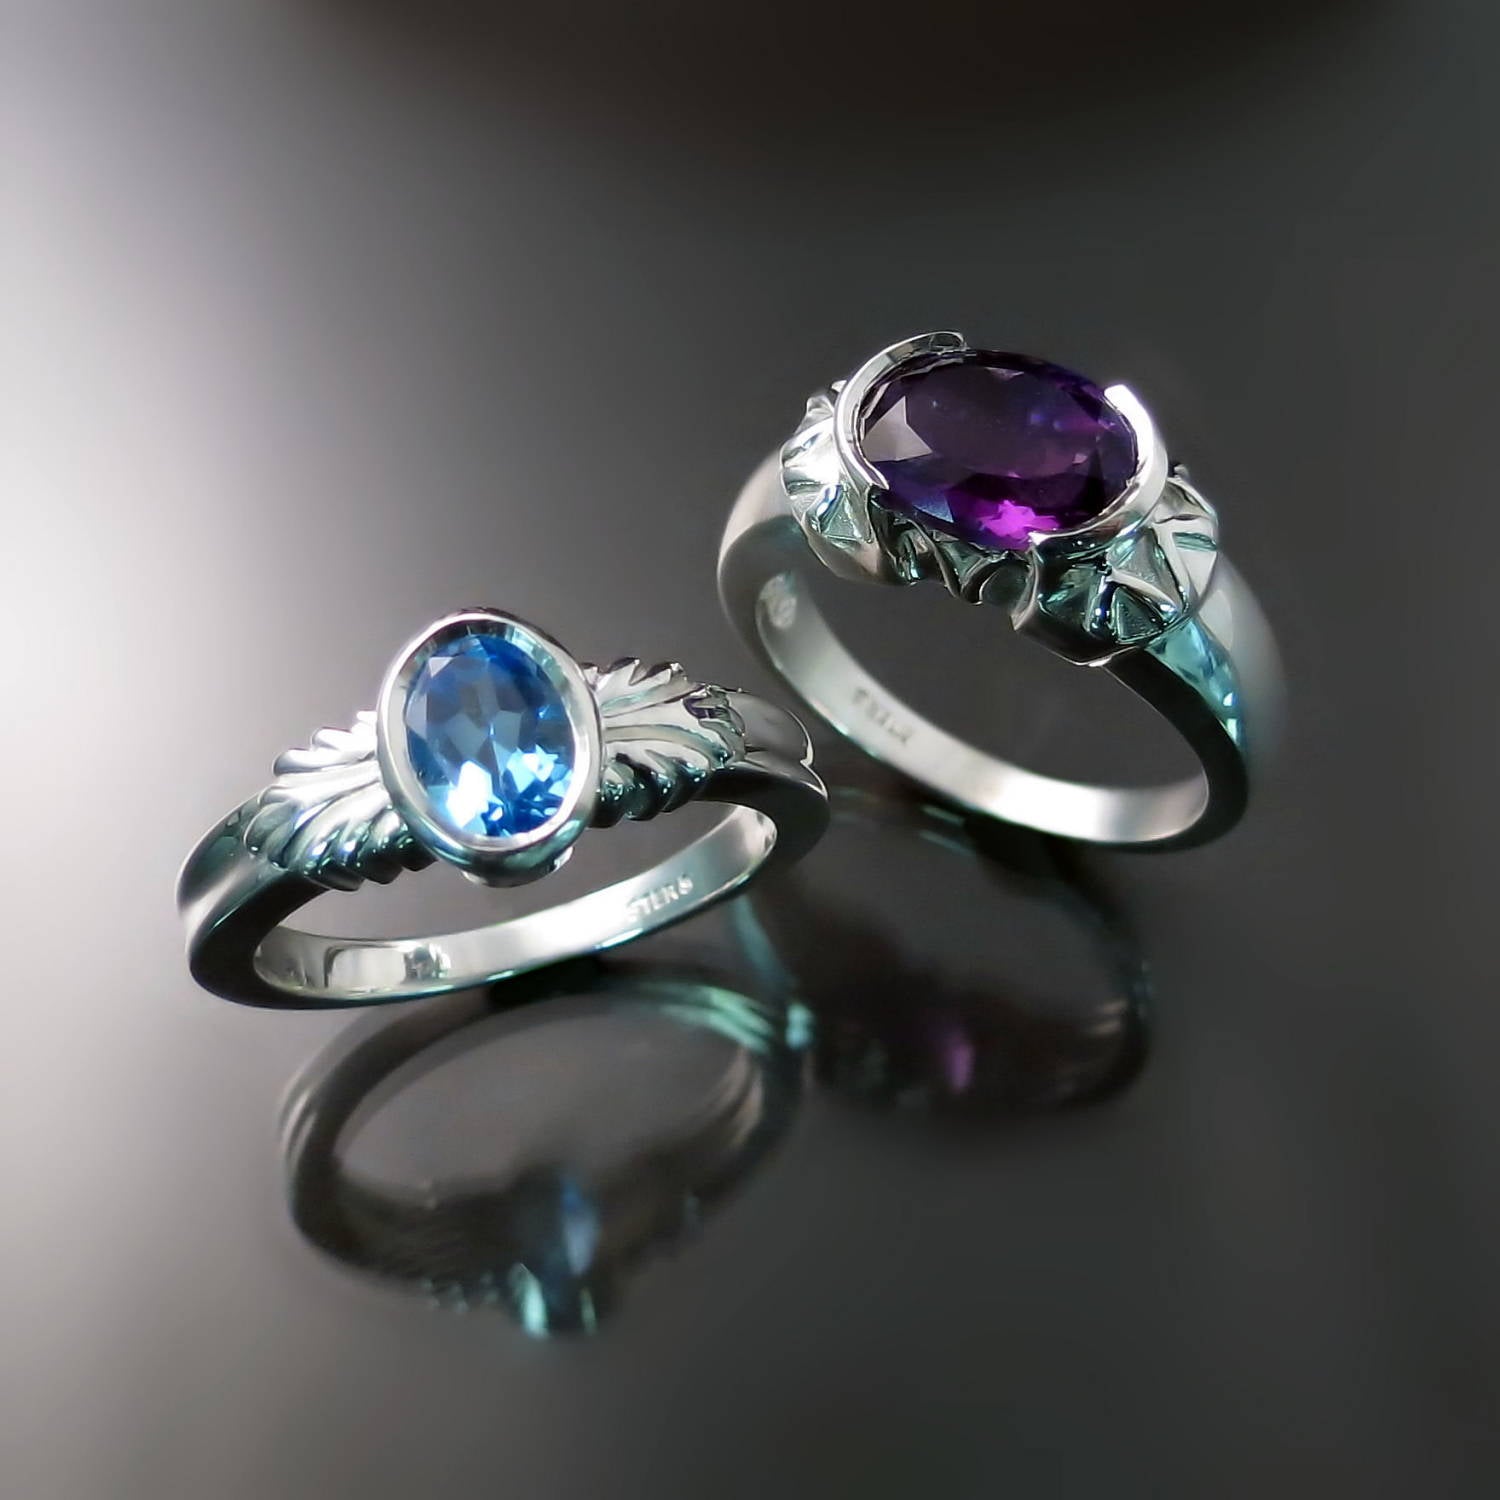 Dainty Blue Topaz Bezel Ring